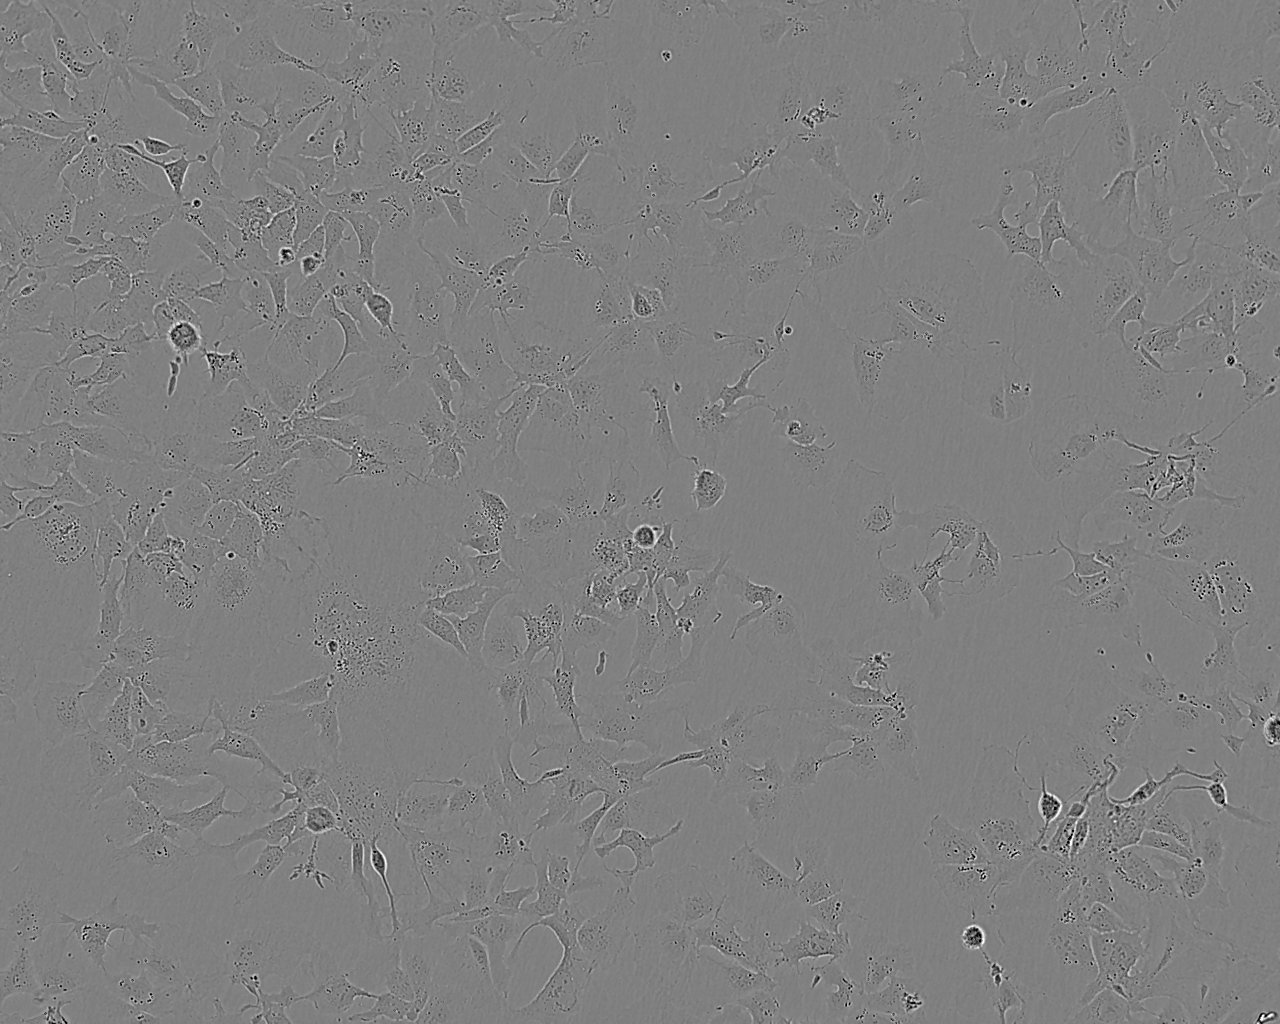 NCI-H128 Fresh Cells|人小细胞肺癌细胞(送STR基因图谱),NCI-H128 Fresh Cells